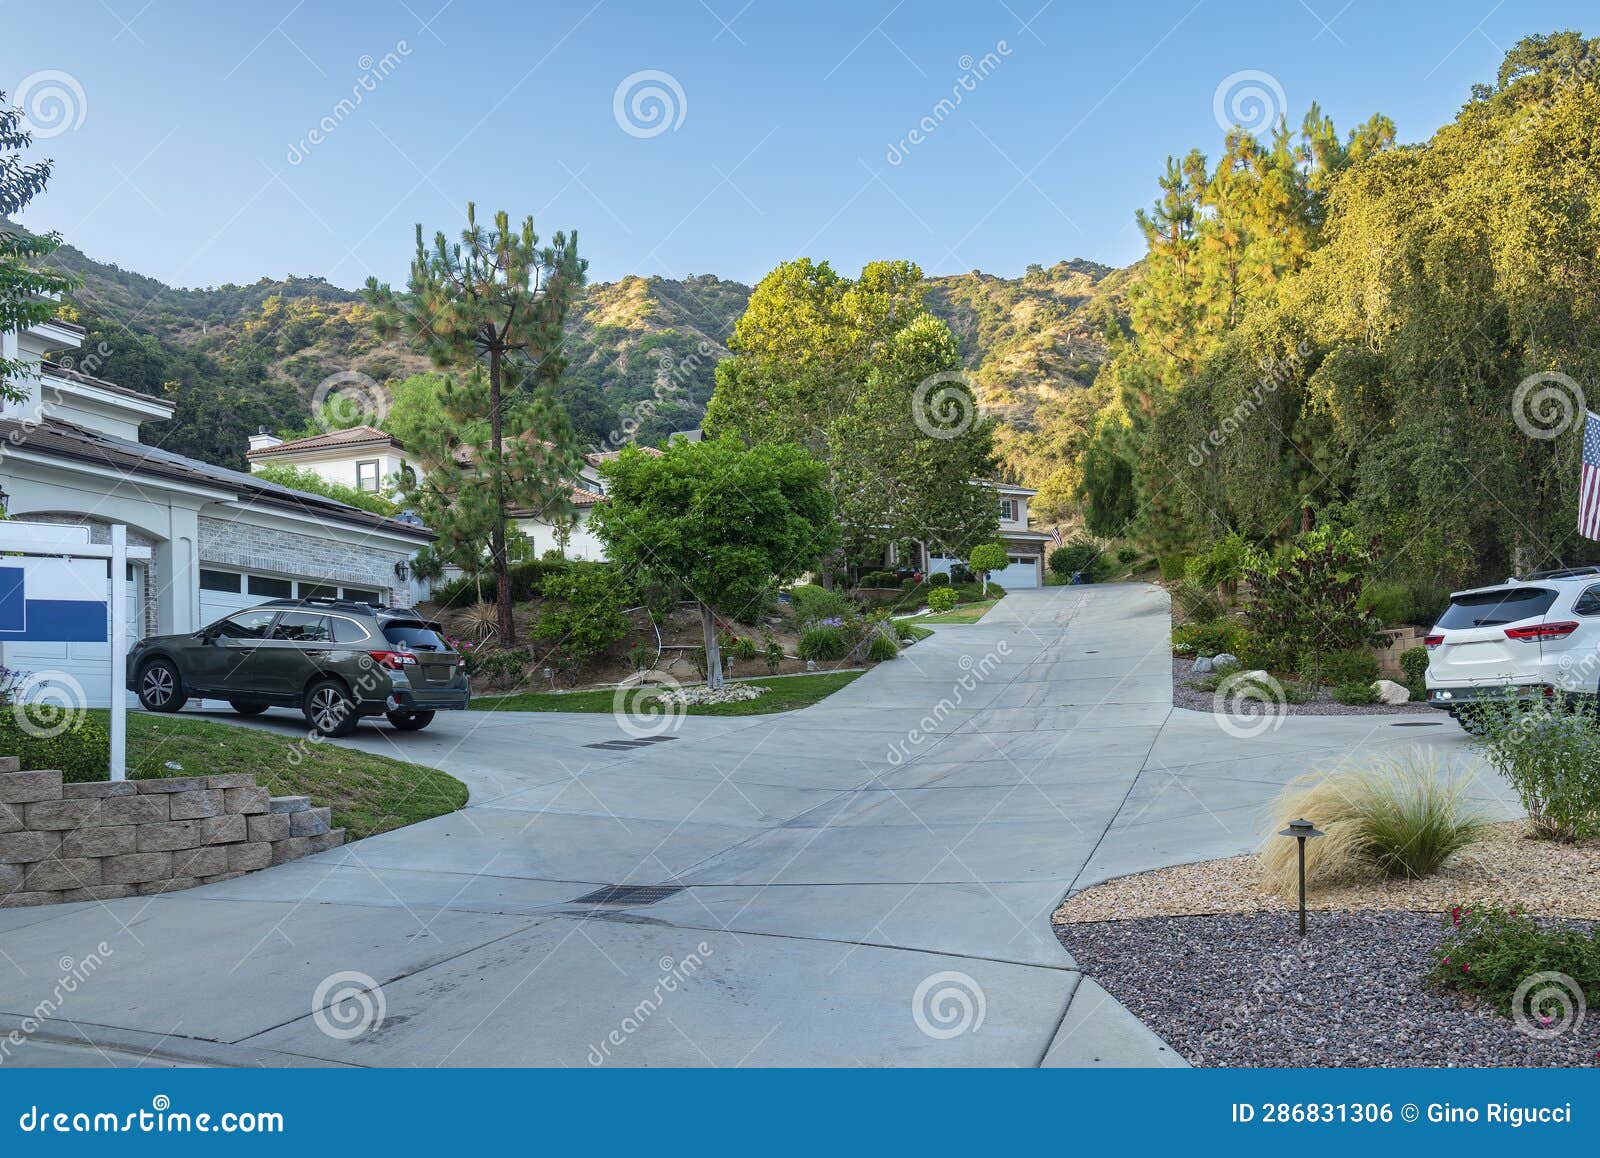 neighborhood at the foothills of a mountain monrovia california